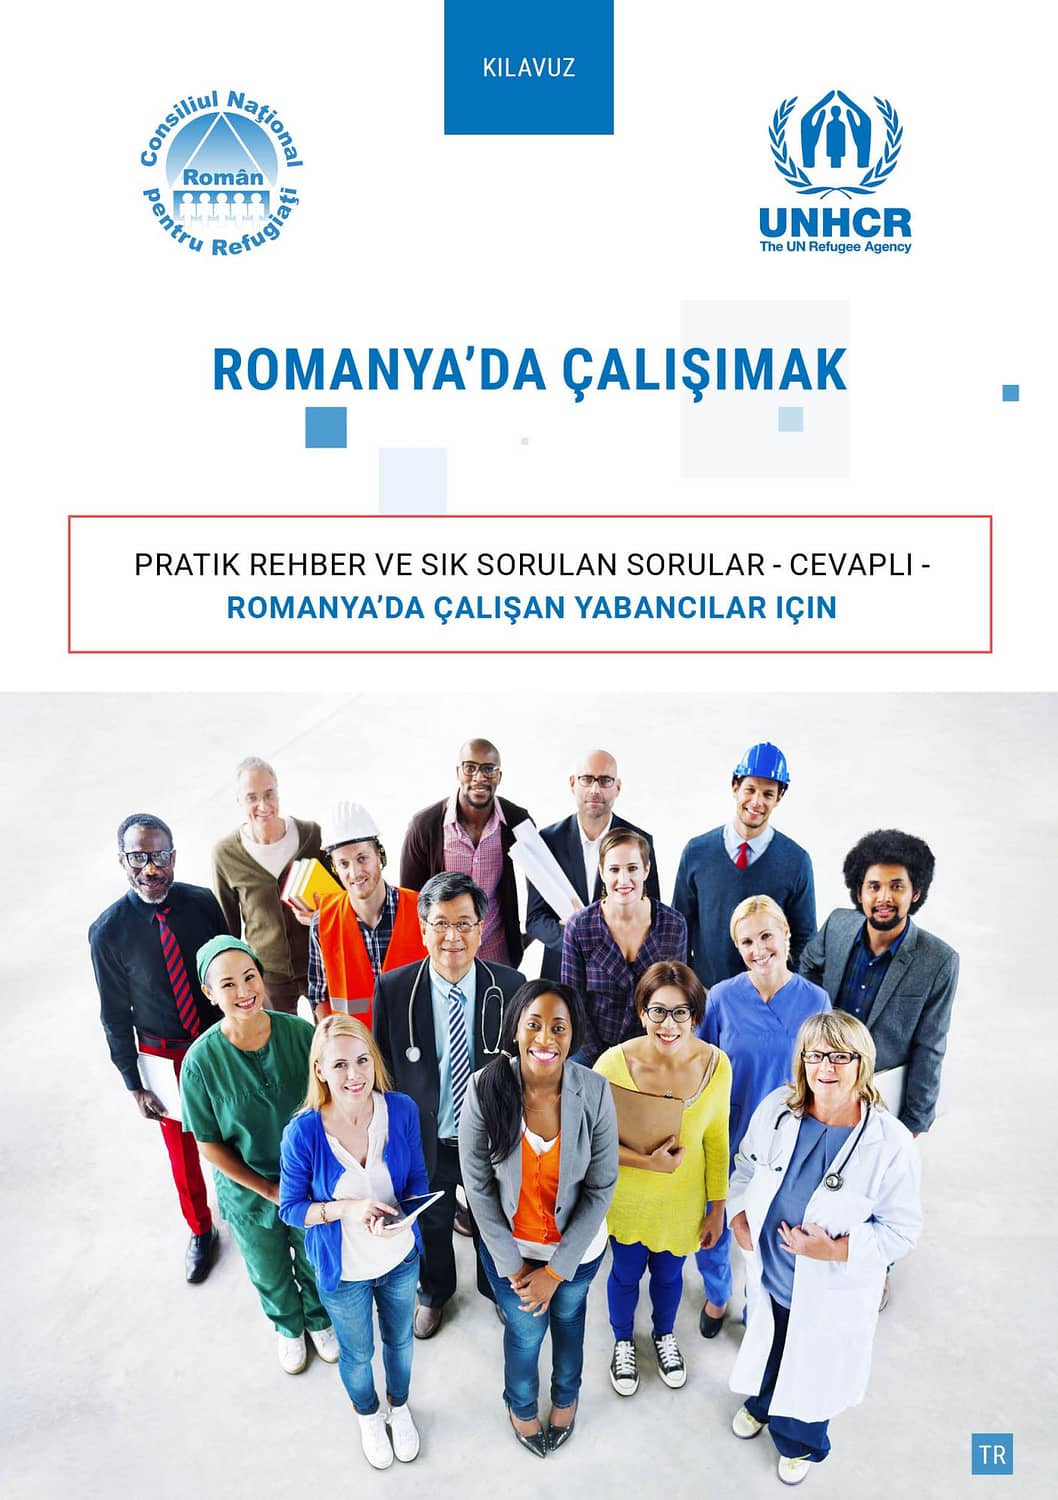 Angajat in Romania, turca, ghid, brosura, publishing design